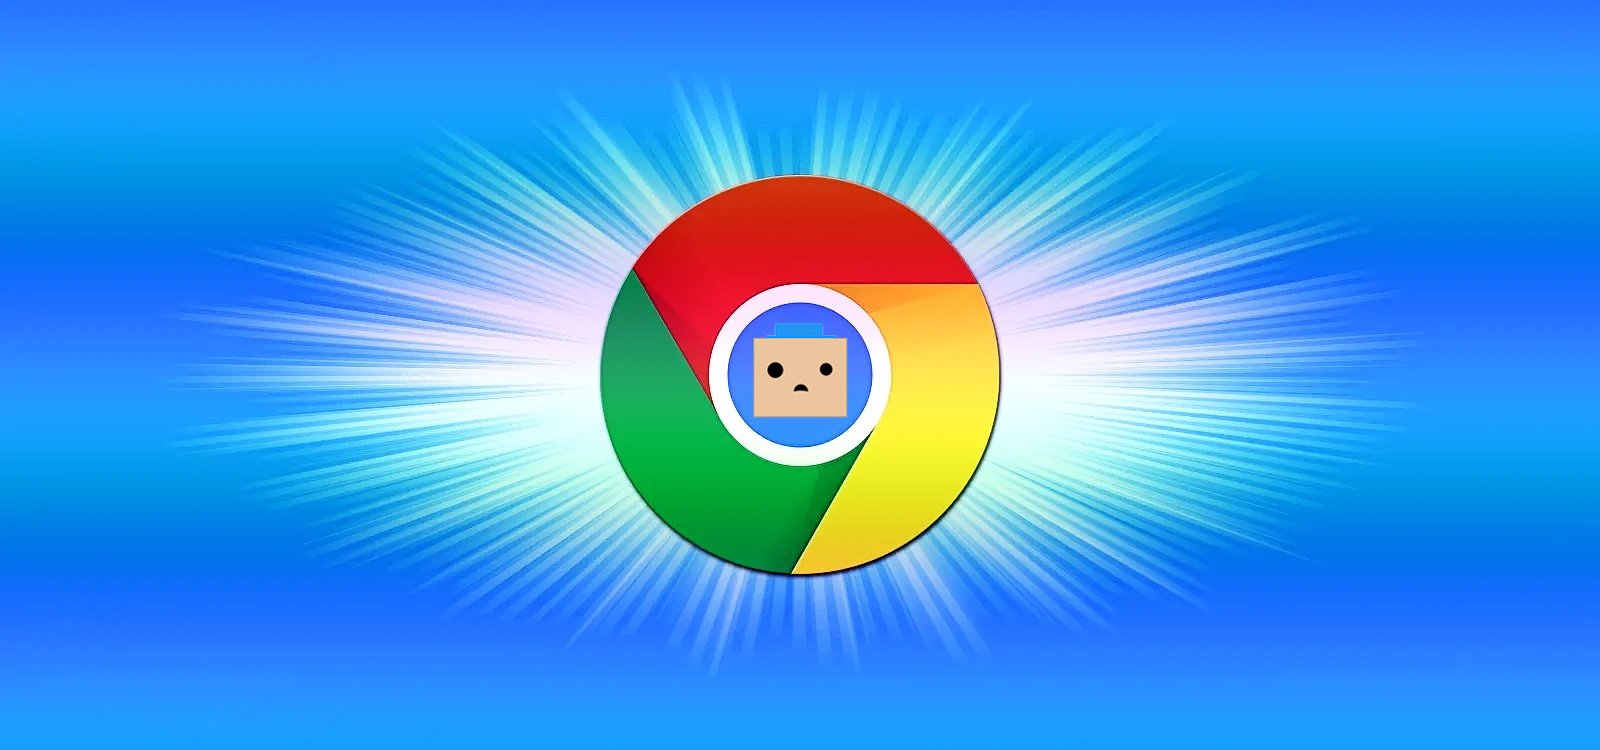 Популярное Chrome-расширение The Great Suspender содержало вредоносное ПО